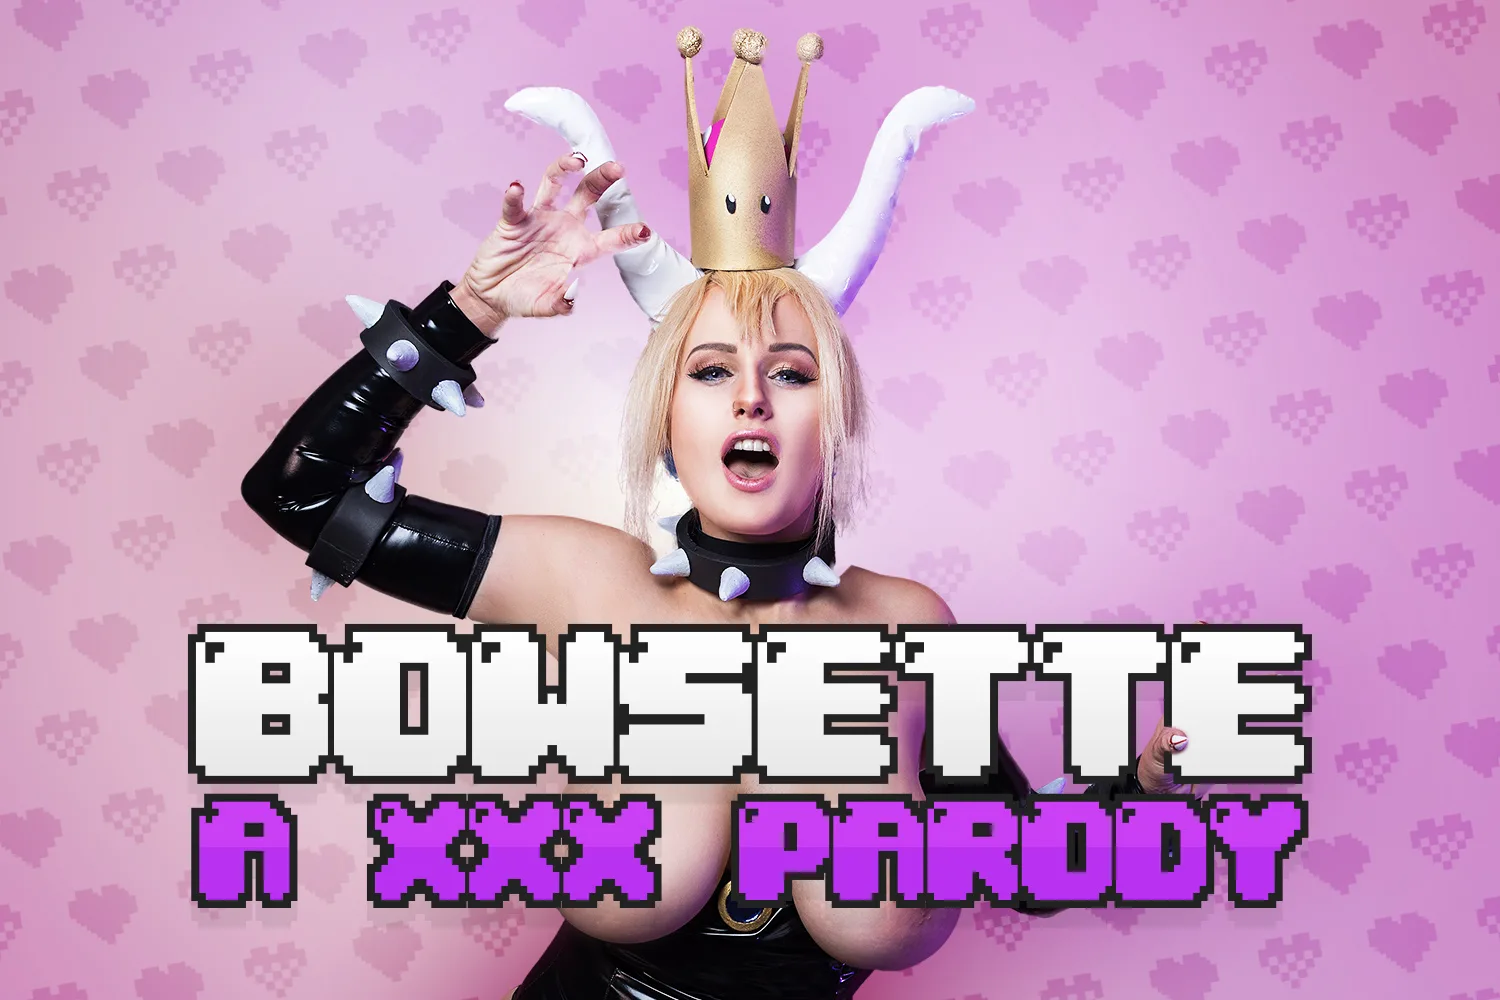 [2018-12-07] Bowsette A XXX Parody - VRCosplayX